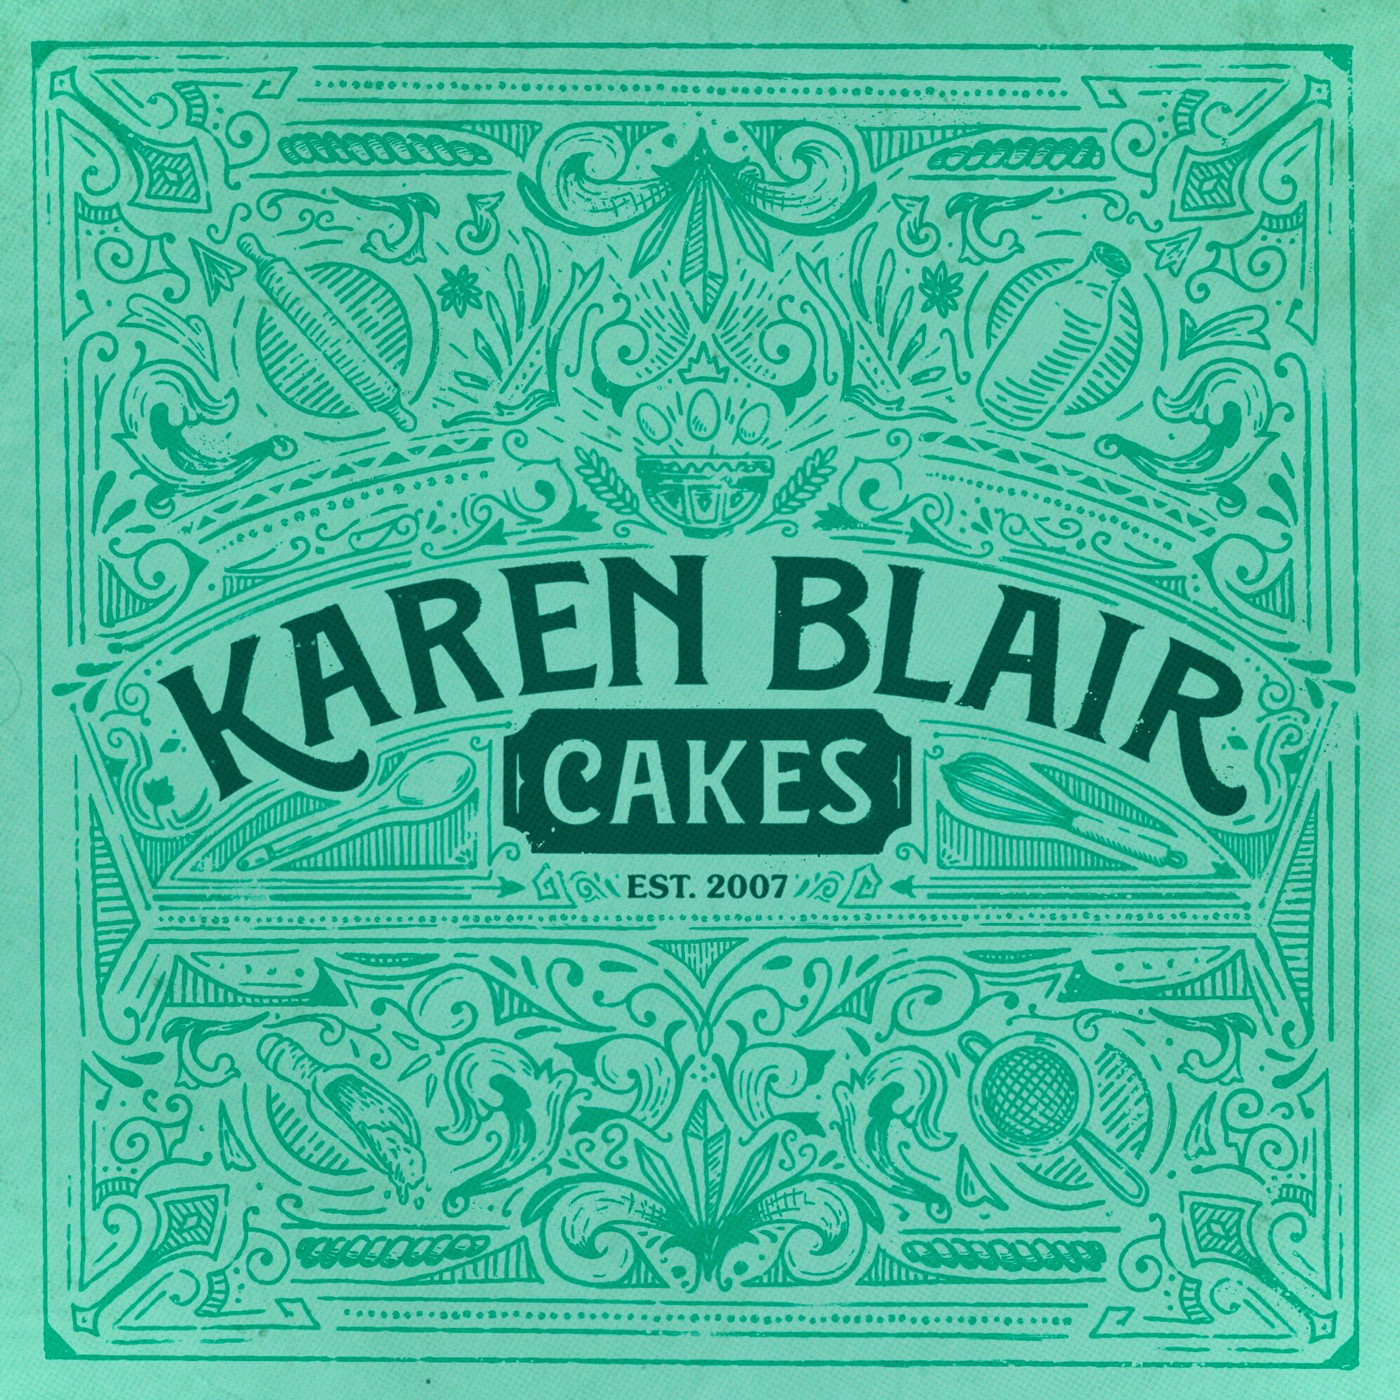 Karen Blair Cakes bakery logo design by Root Studio